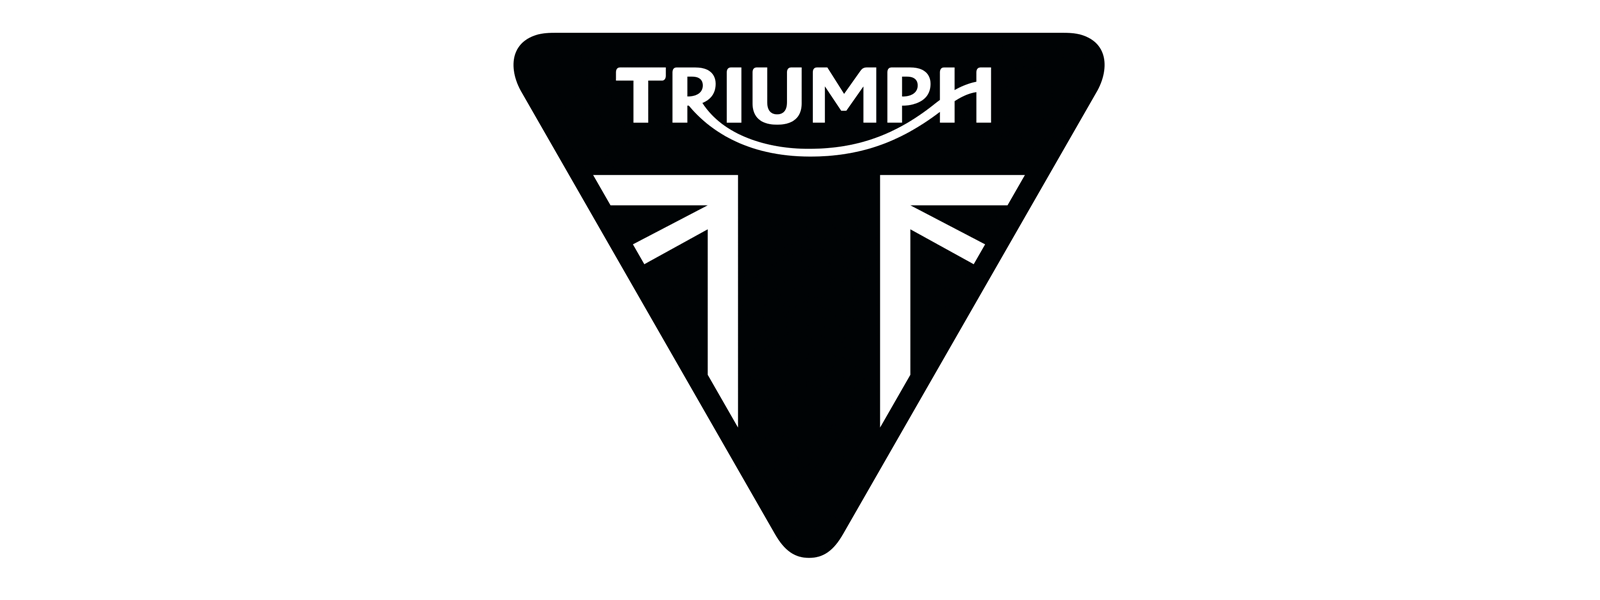 Triumph Triangle Logo - Triumph logo | Motorcycle brands: logo, specs, history.